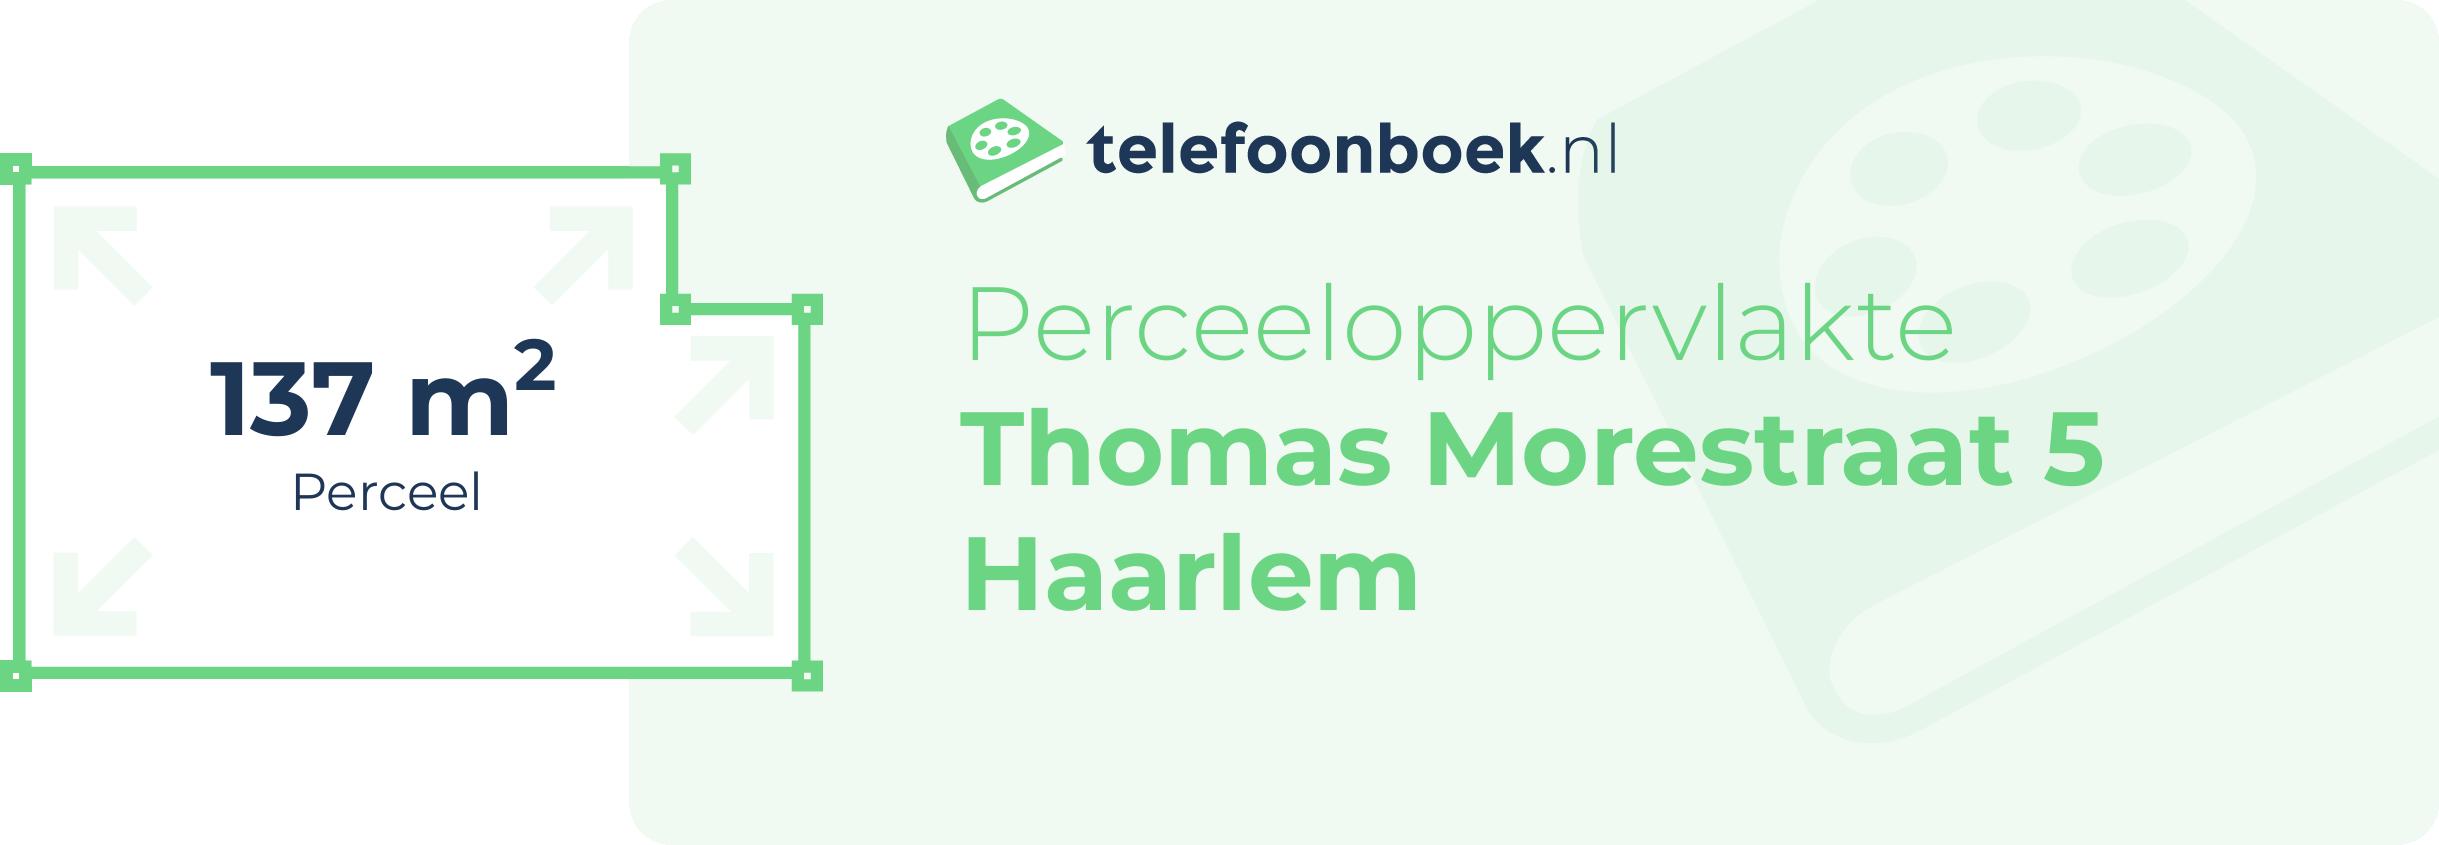 Perceeloppervlakte Thomas Morestraat 5 Haarlem